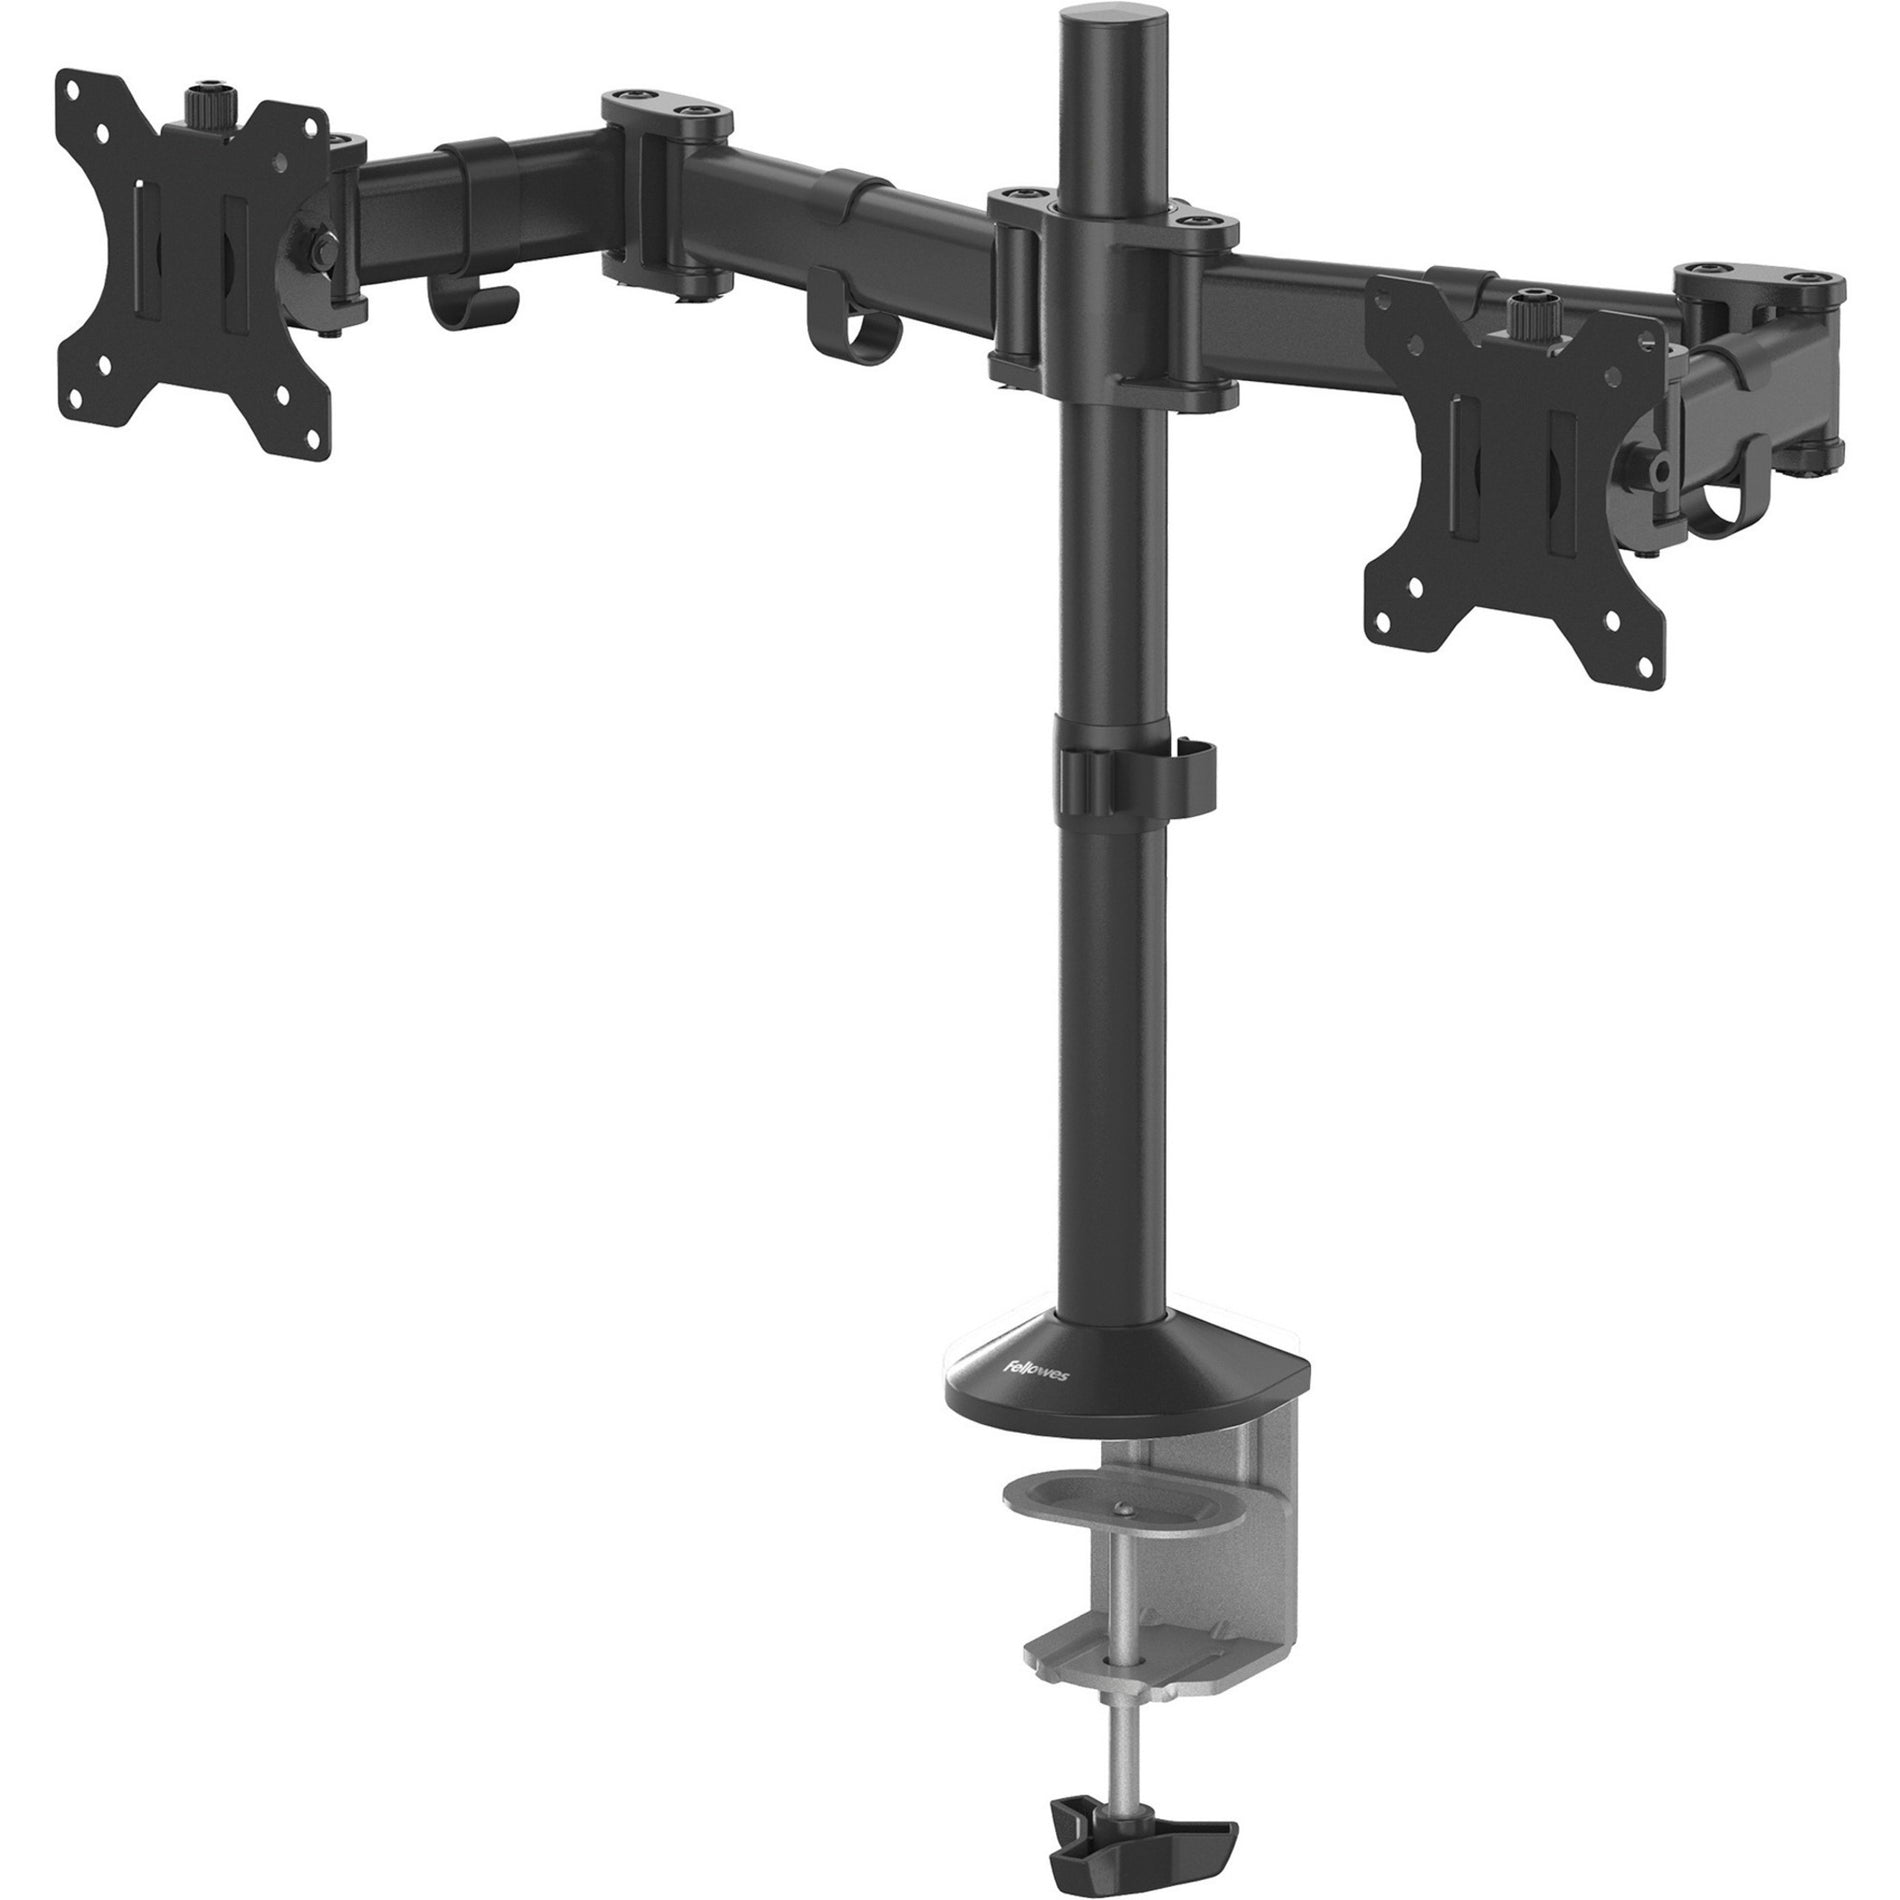 Fellowes 8502601 Reflex Dual Monitor Arm Desk Mount Supports 2 Monitors 48 lb Maximum Load Capacity